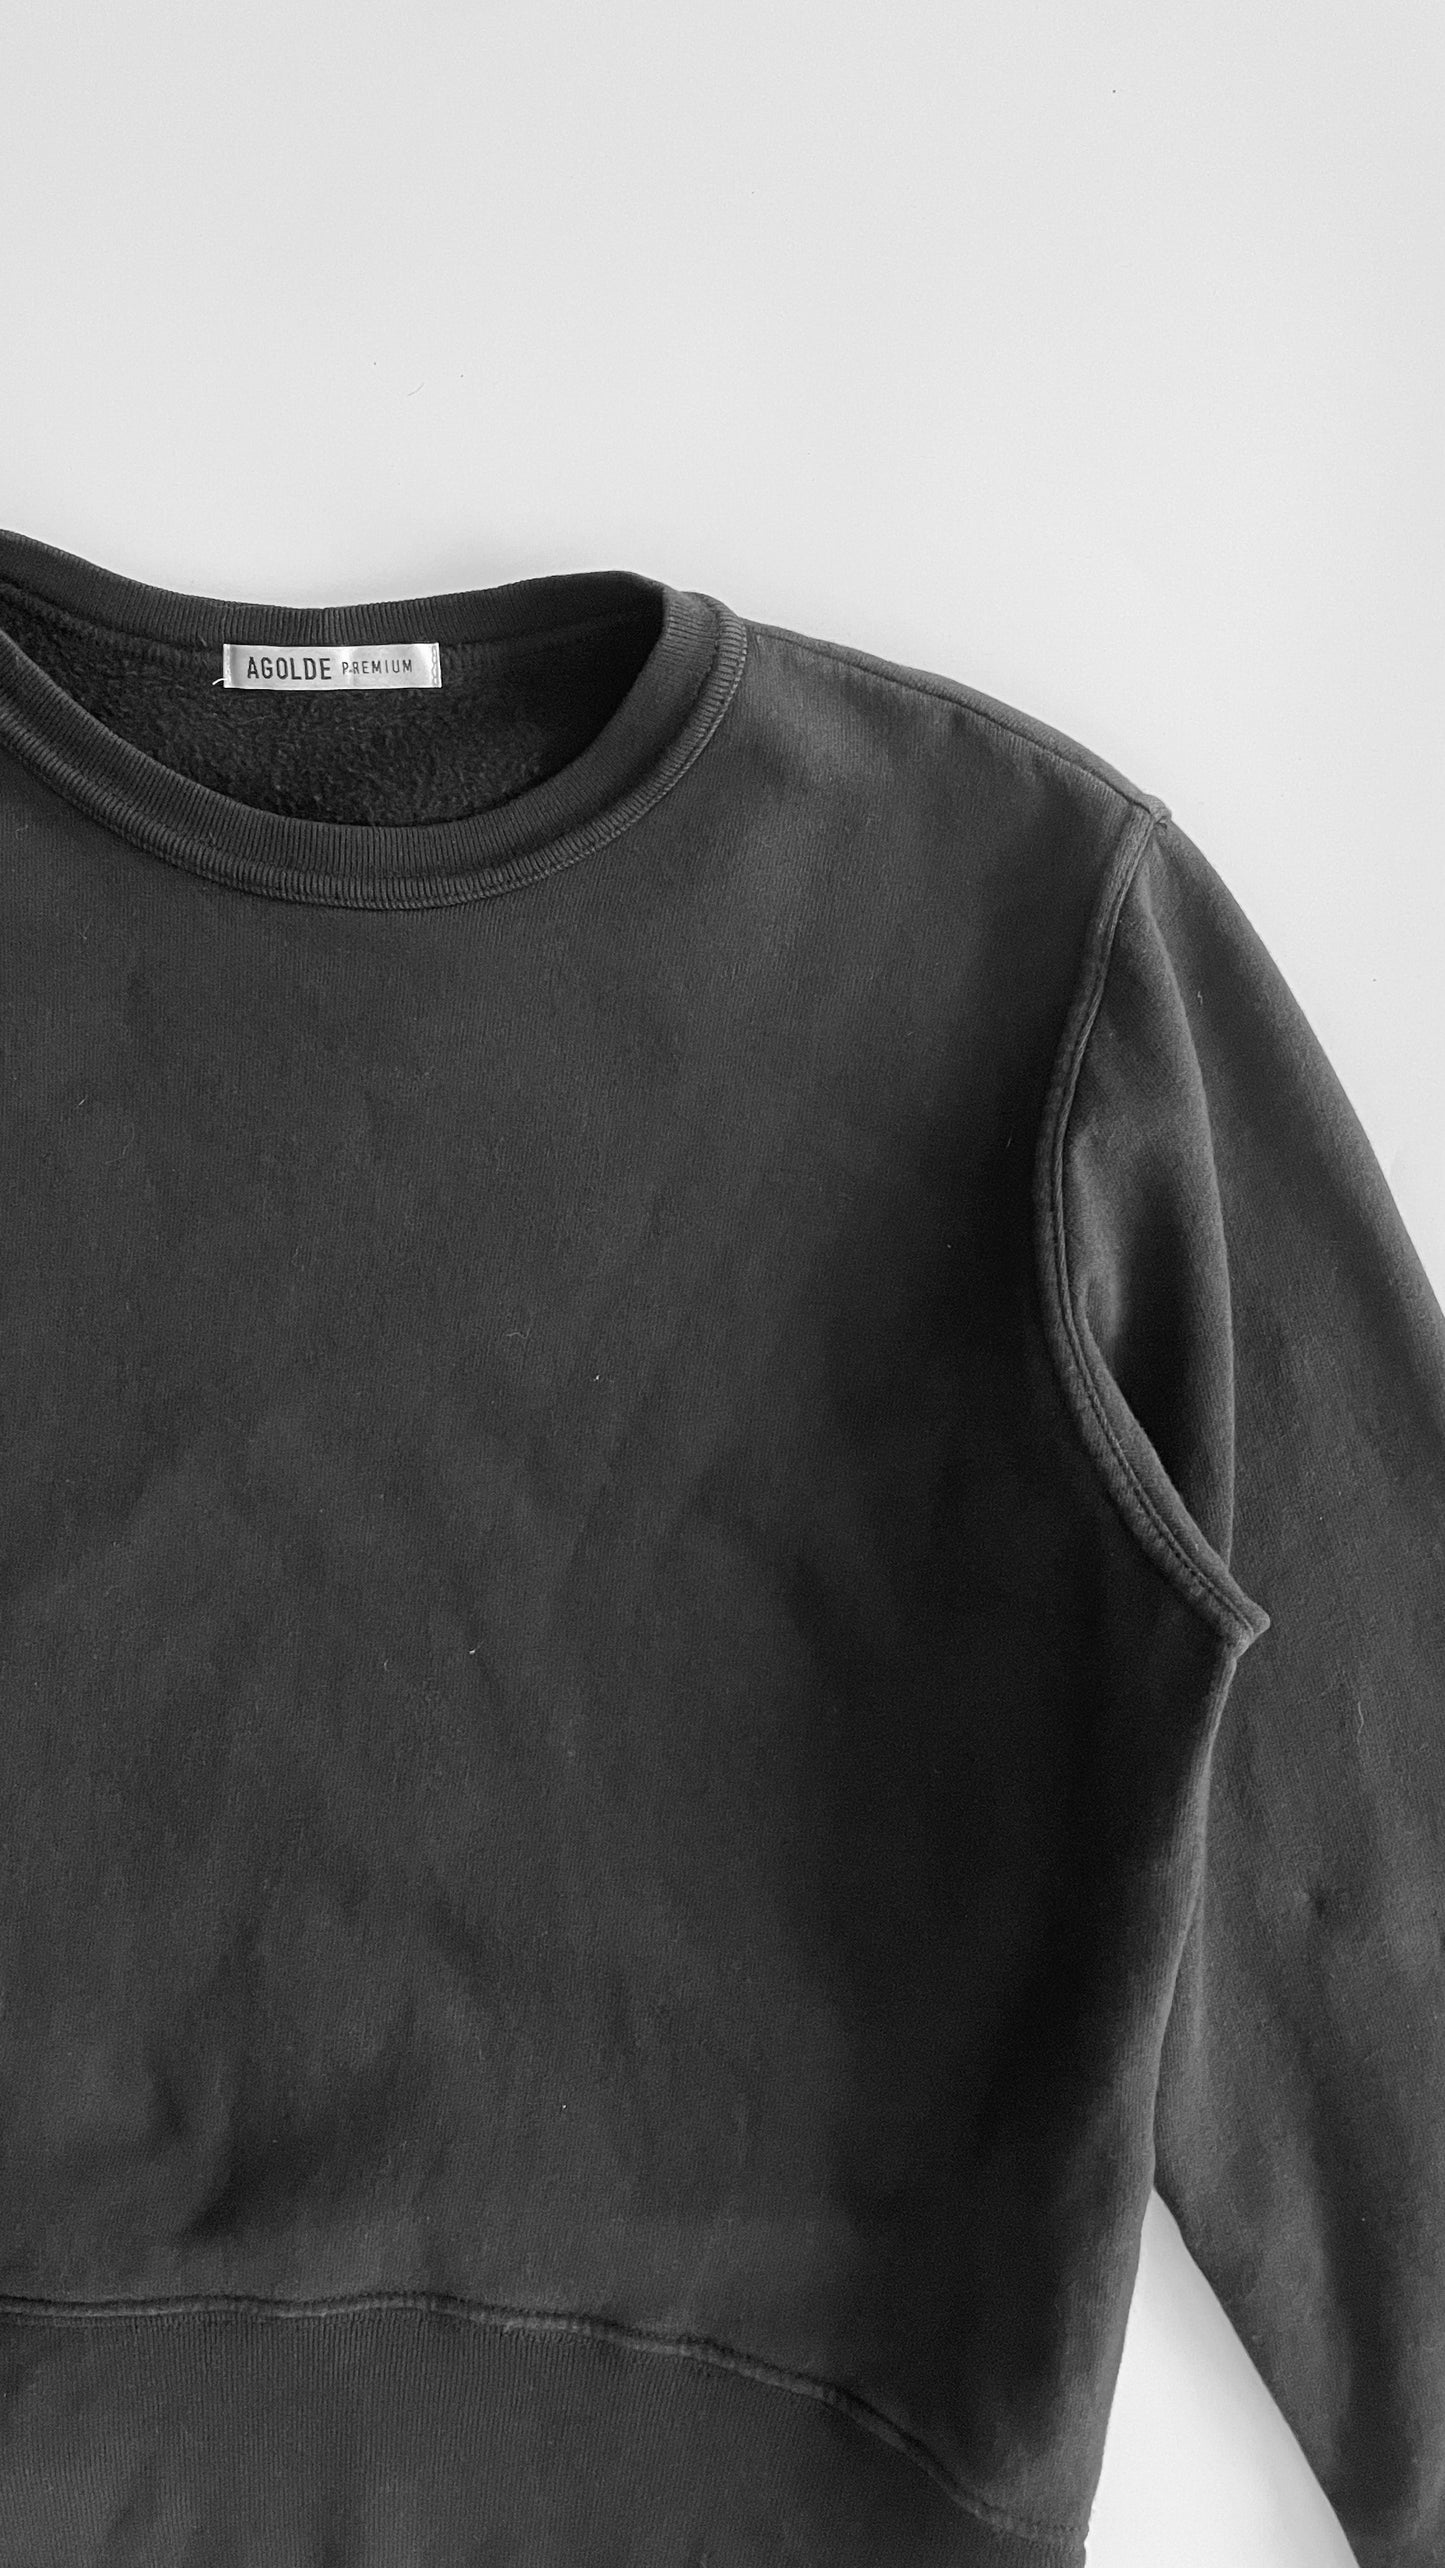 Pre-Loved faded black A GOLD E crewneck sweatshirt - Size S